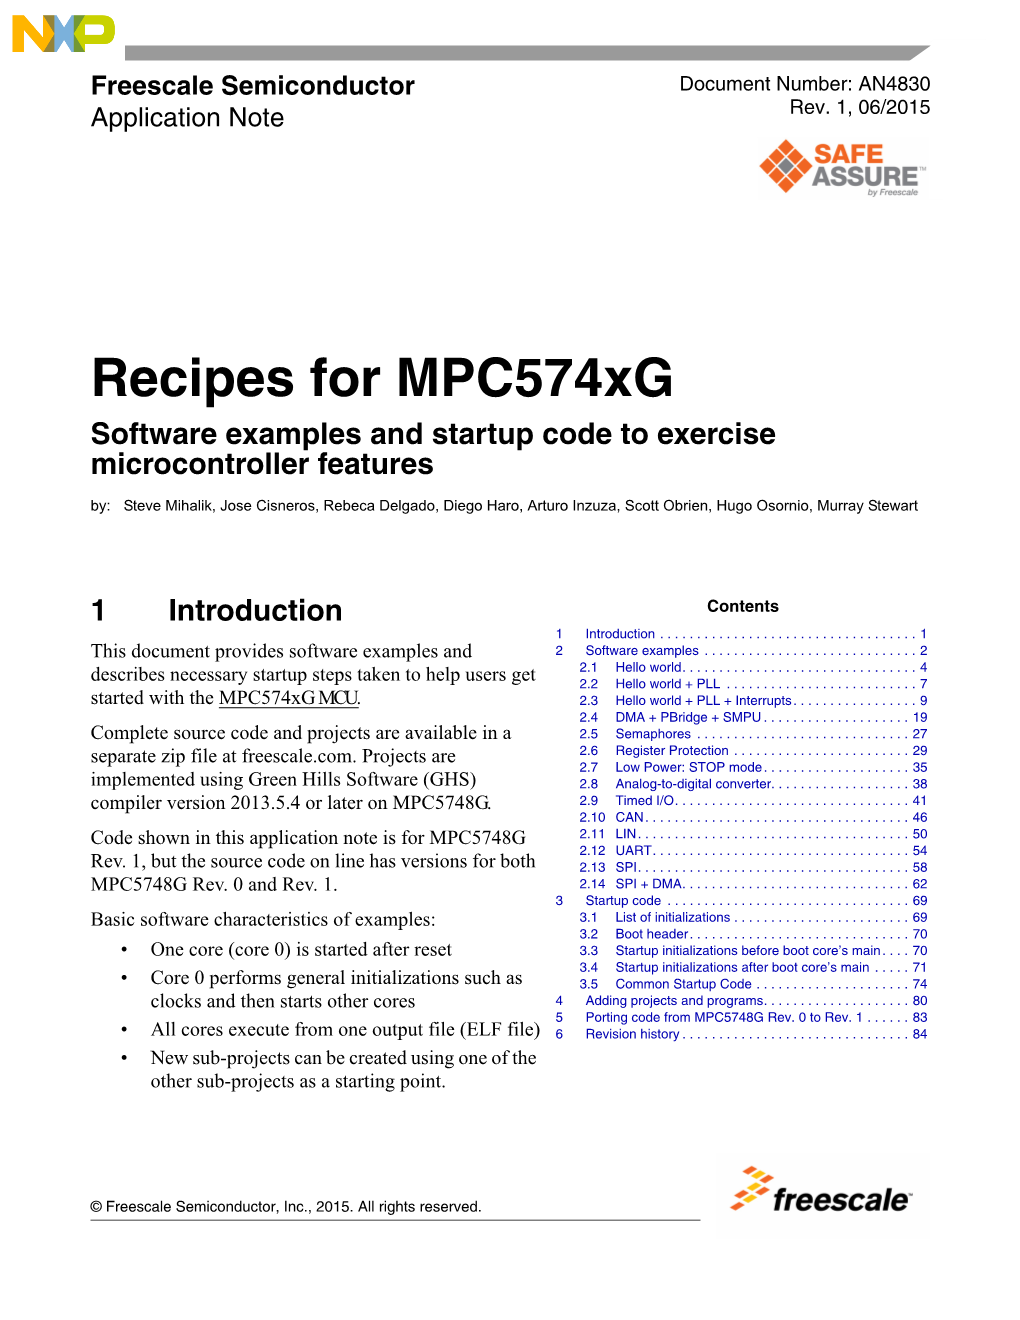 AN4830: Mpc574xg Mcus Cookbook – Application Note